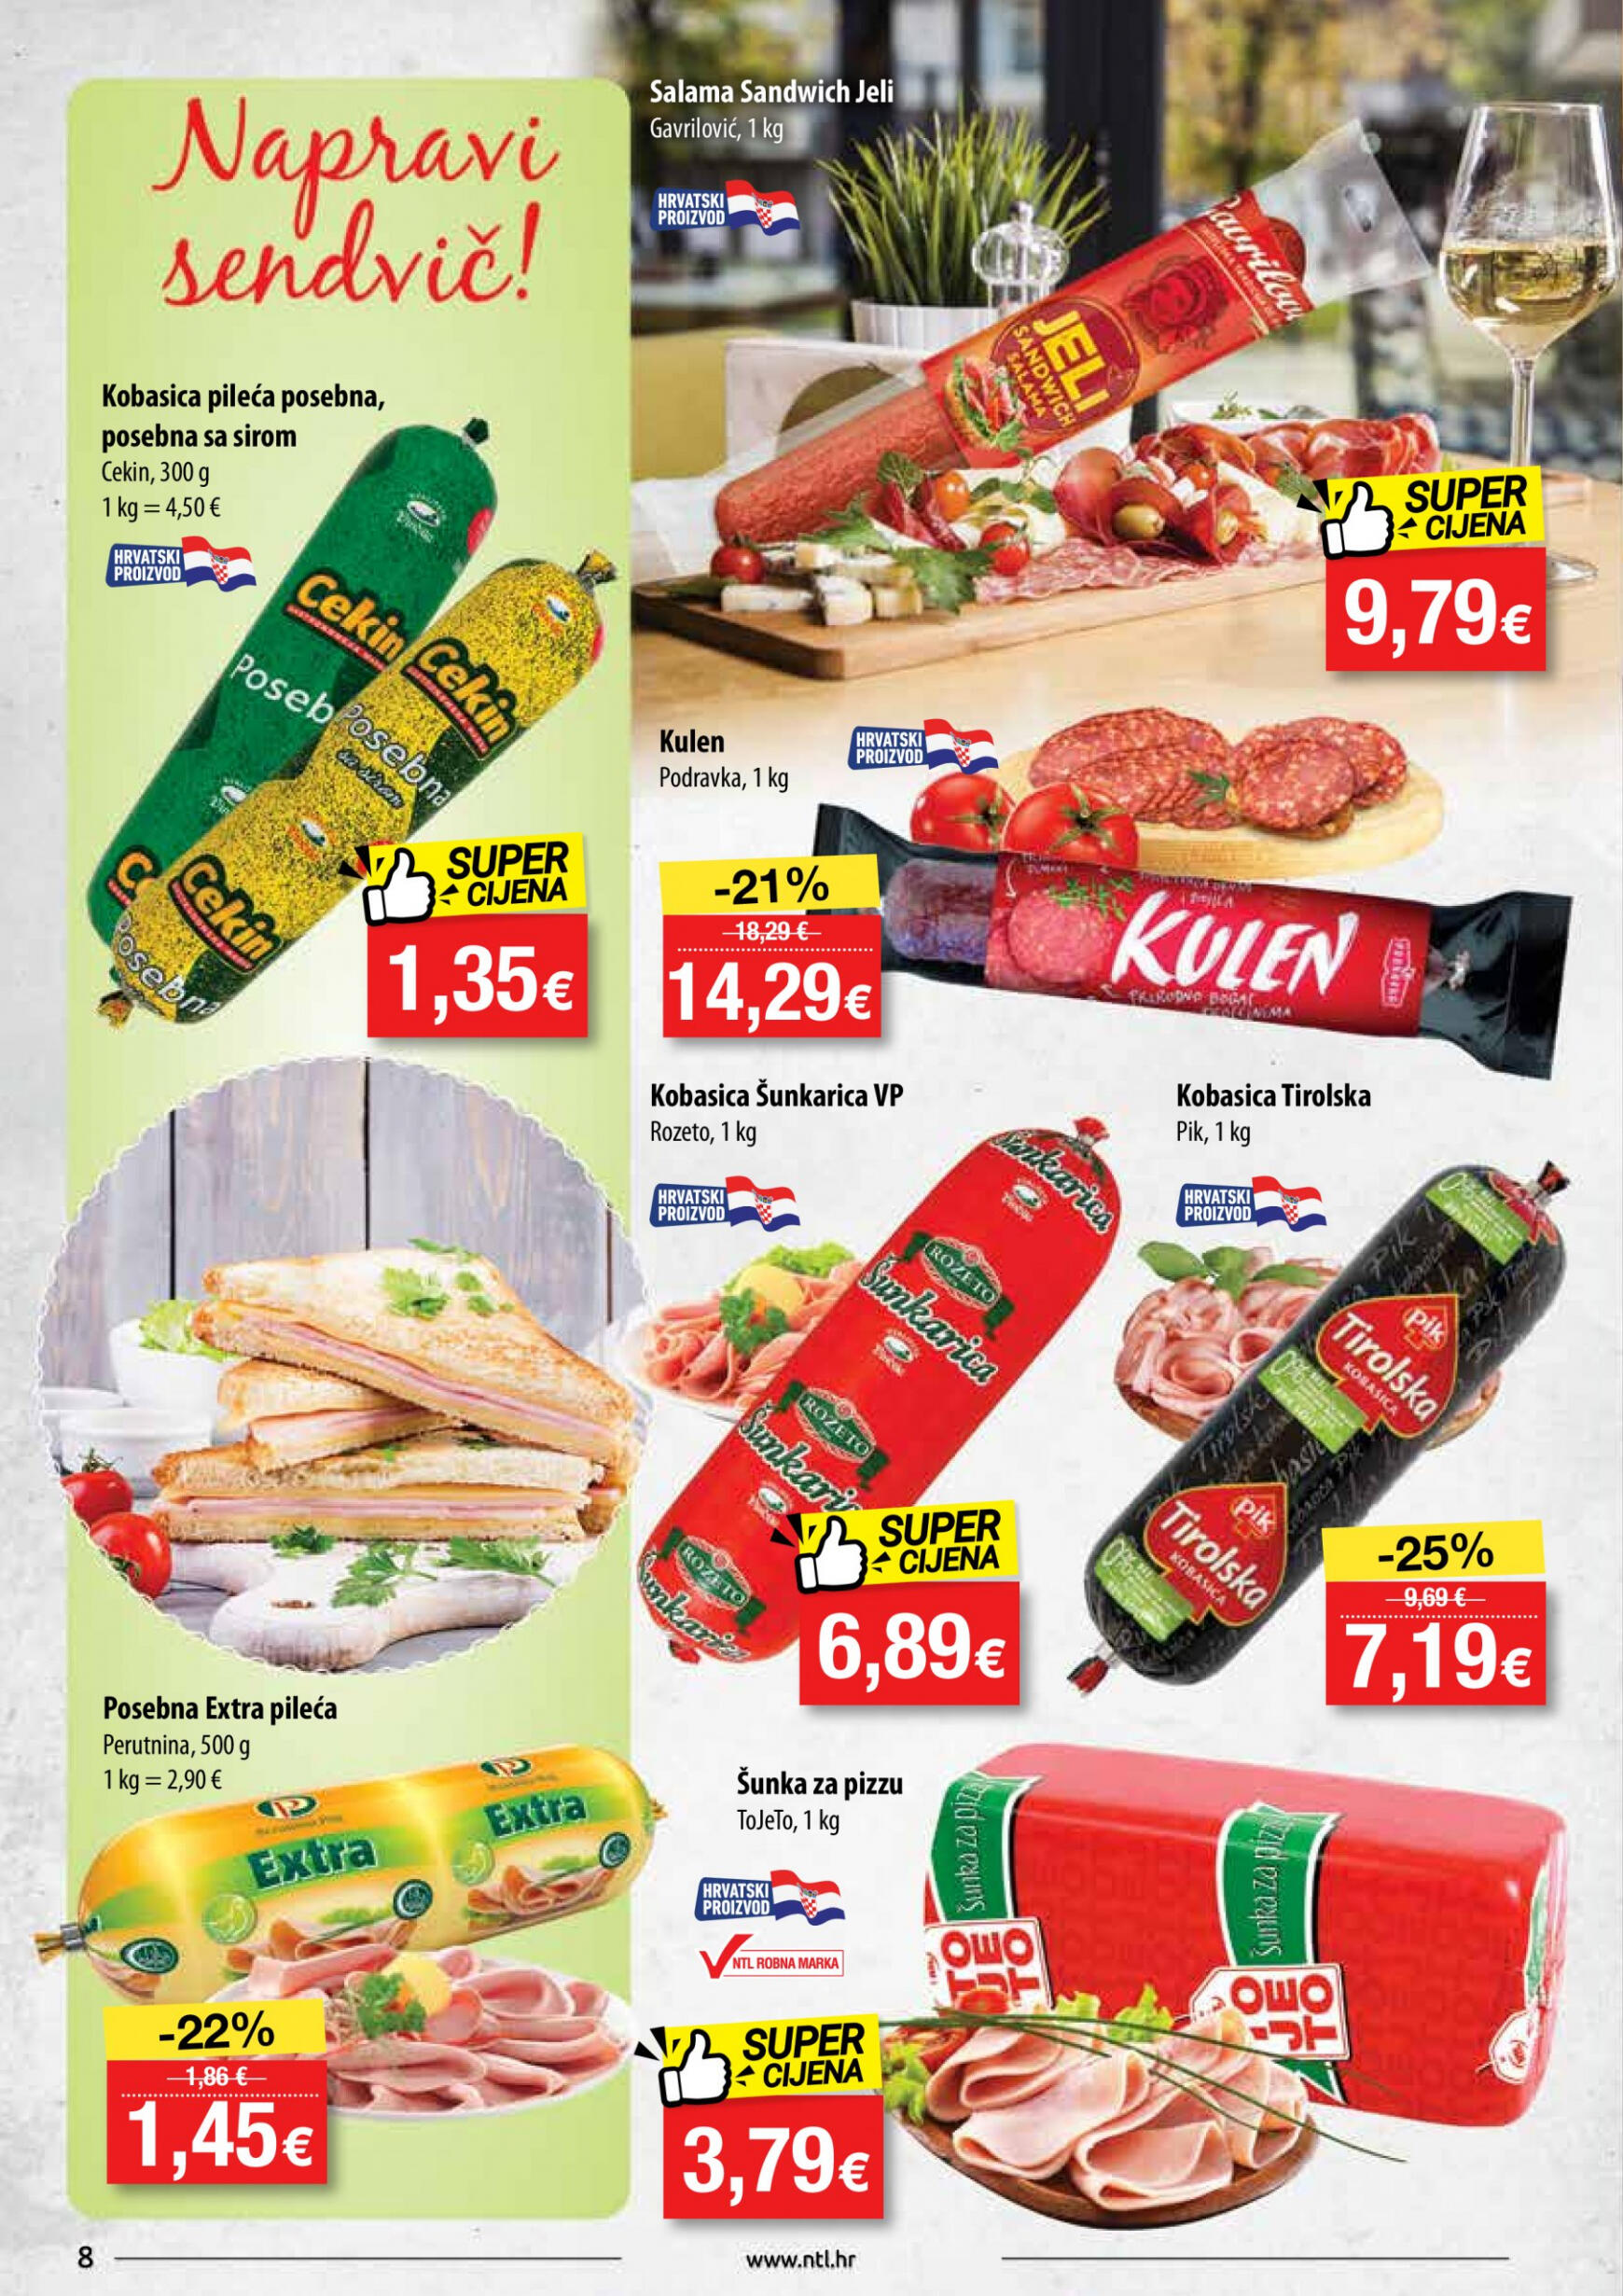 ntl - Novi katalog NTL - Supermarketi Soblinec, Krapina, Duga Resa 10.04. - 16.04. - page: 8